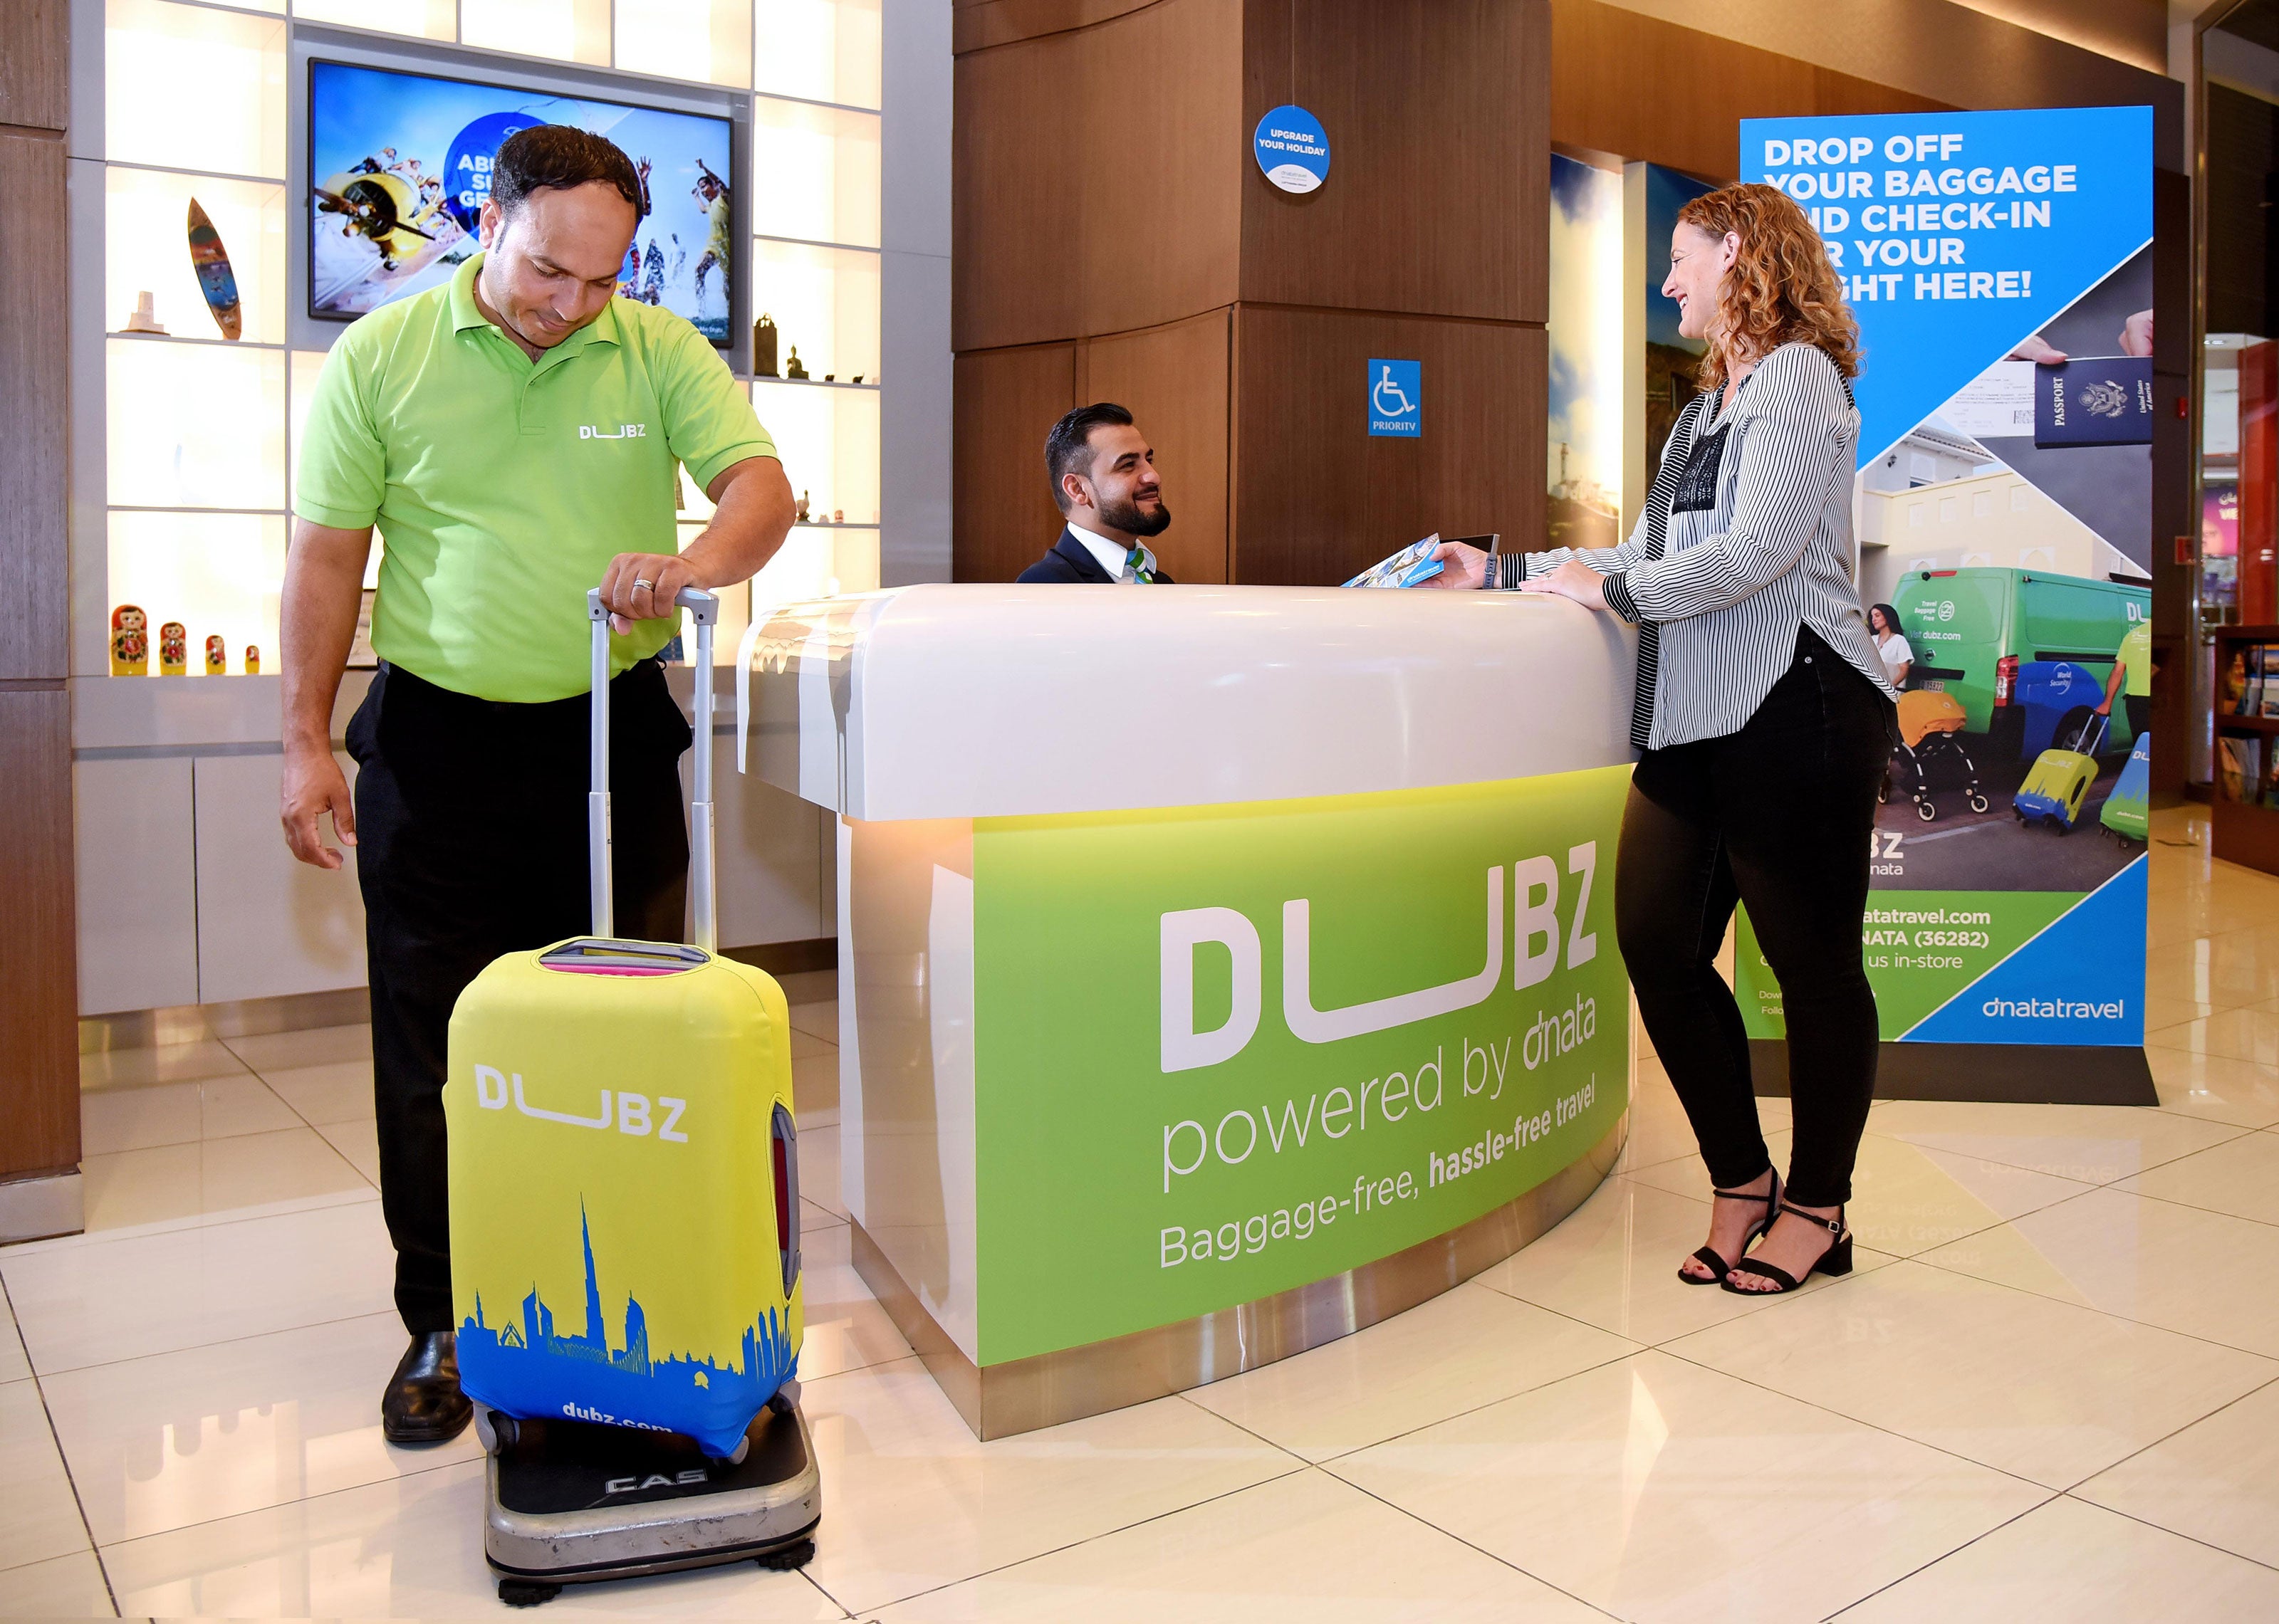 dubz-dubai-mall-luggage-drop-check-in-2019